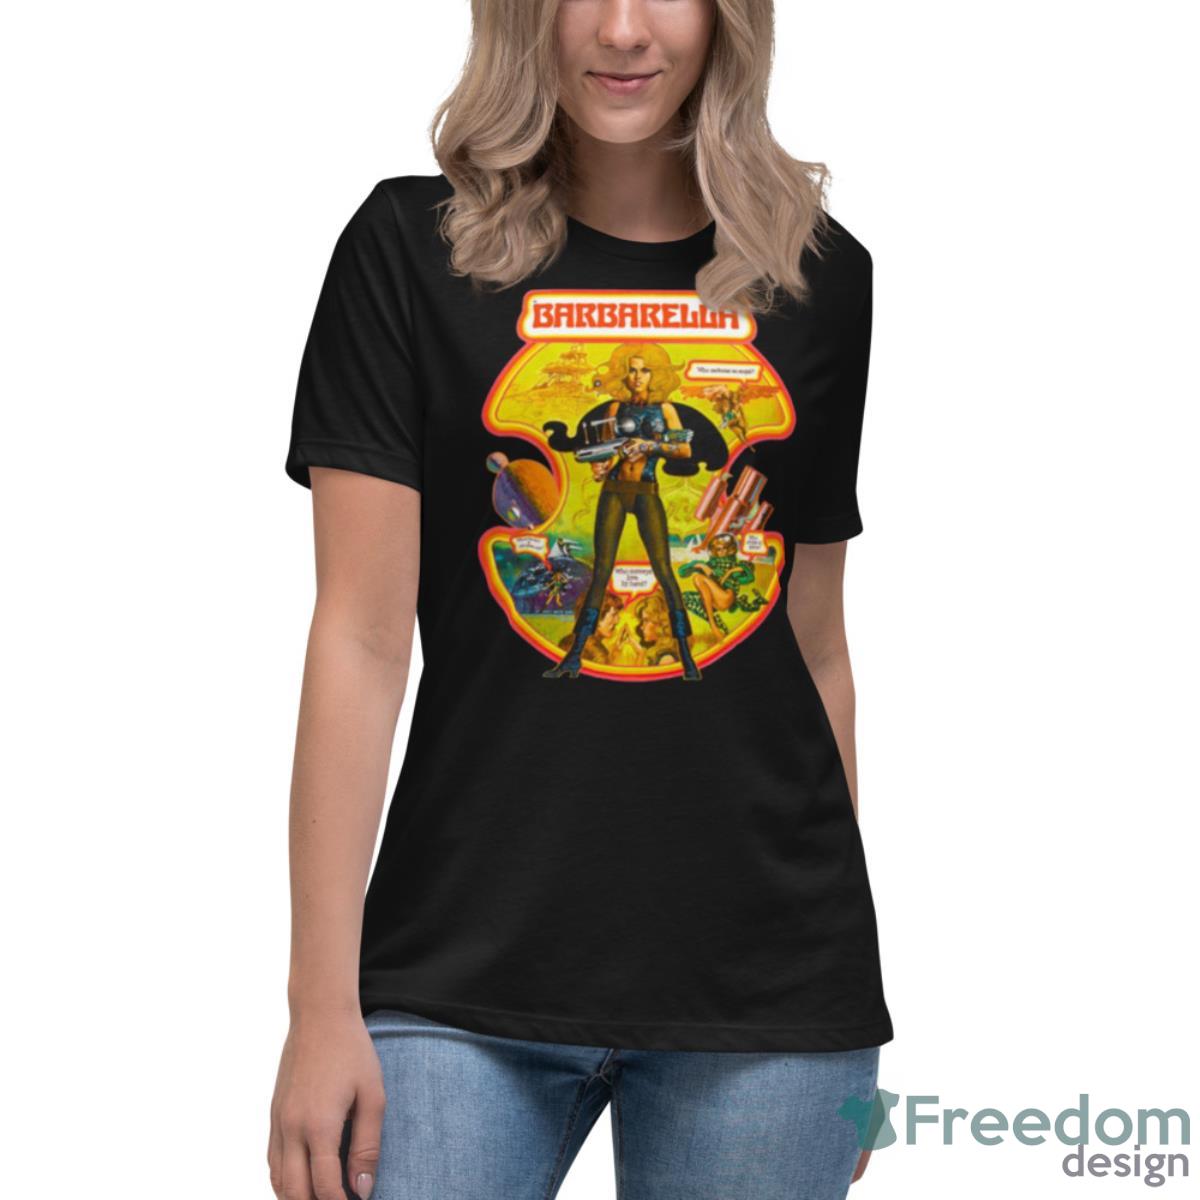 Barbarella Science Fiction Cult Jane Fonda Shirt